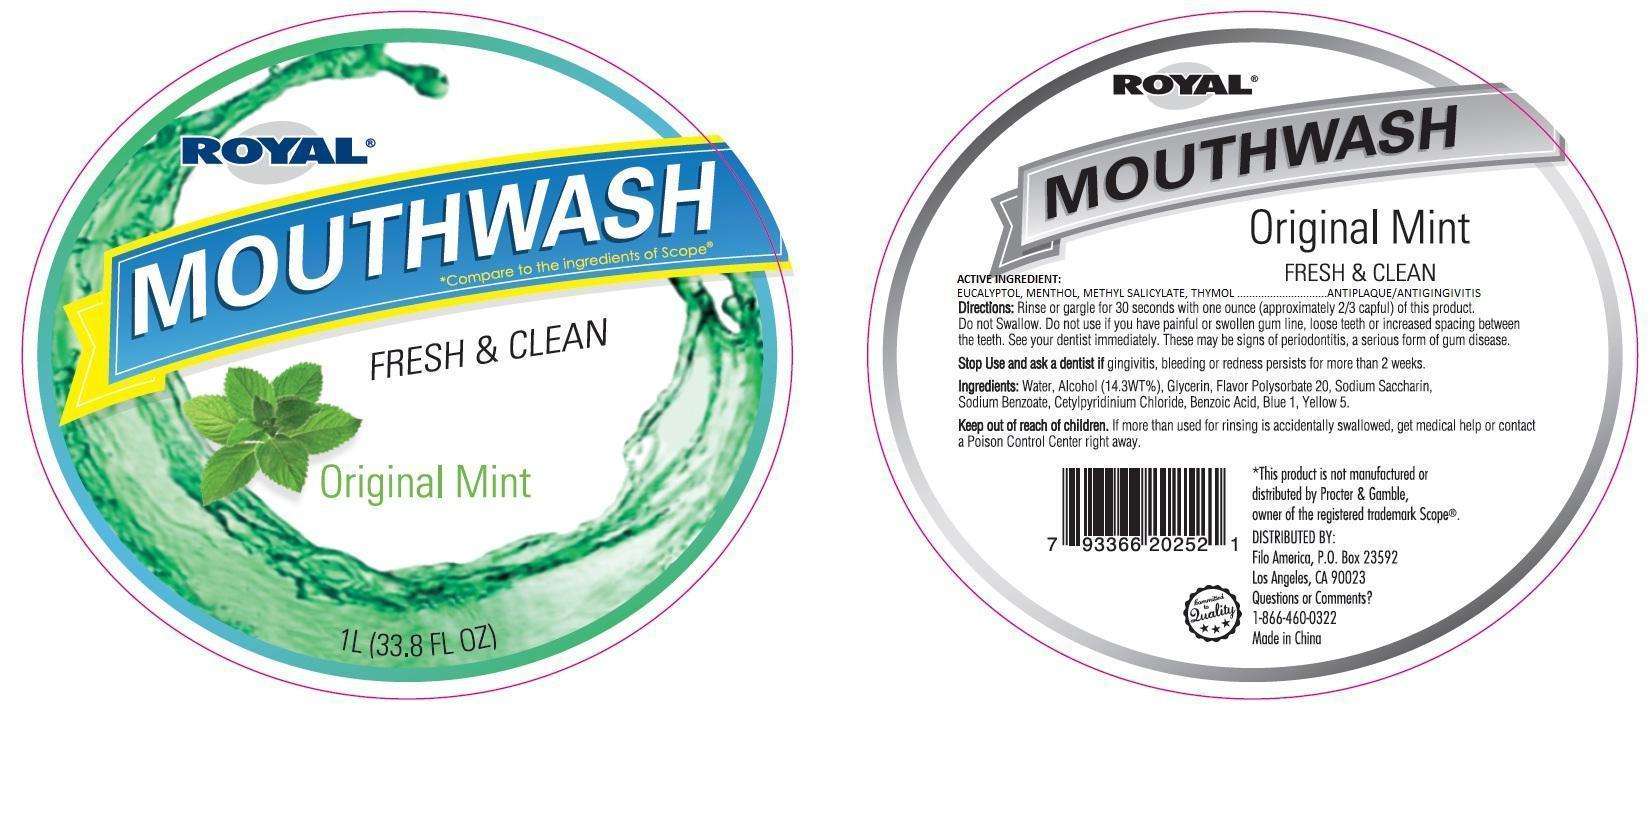 Royal Mouthwash Fresh and Clean Original Mint